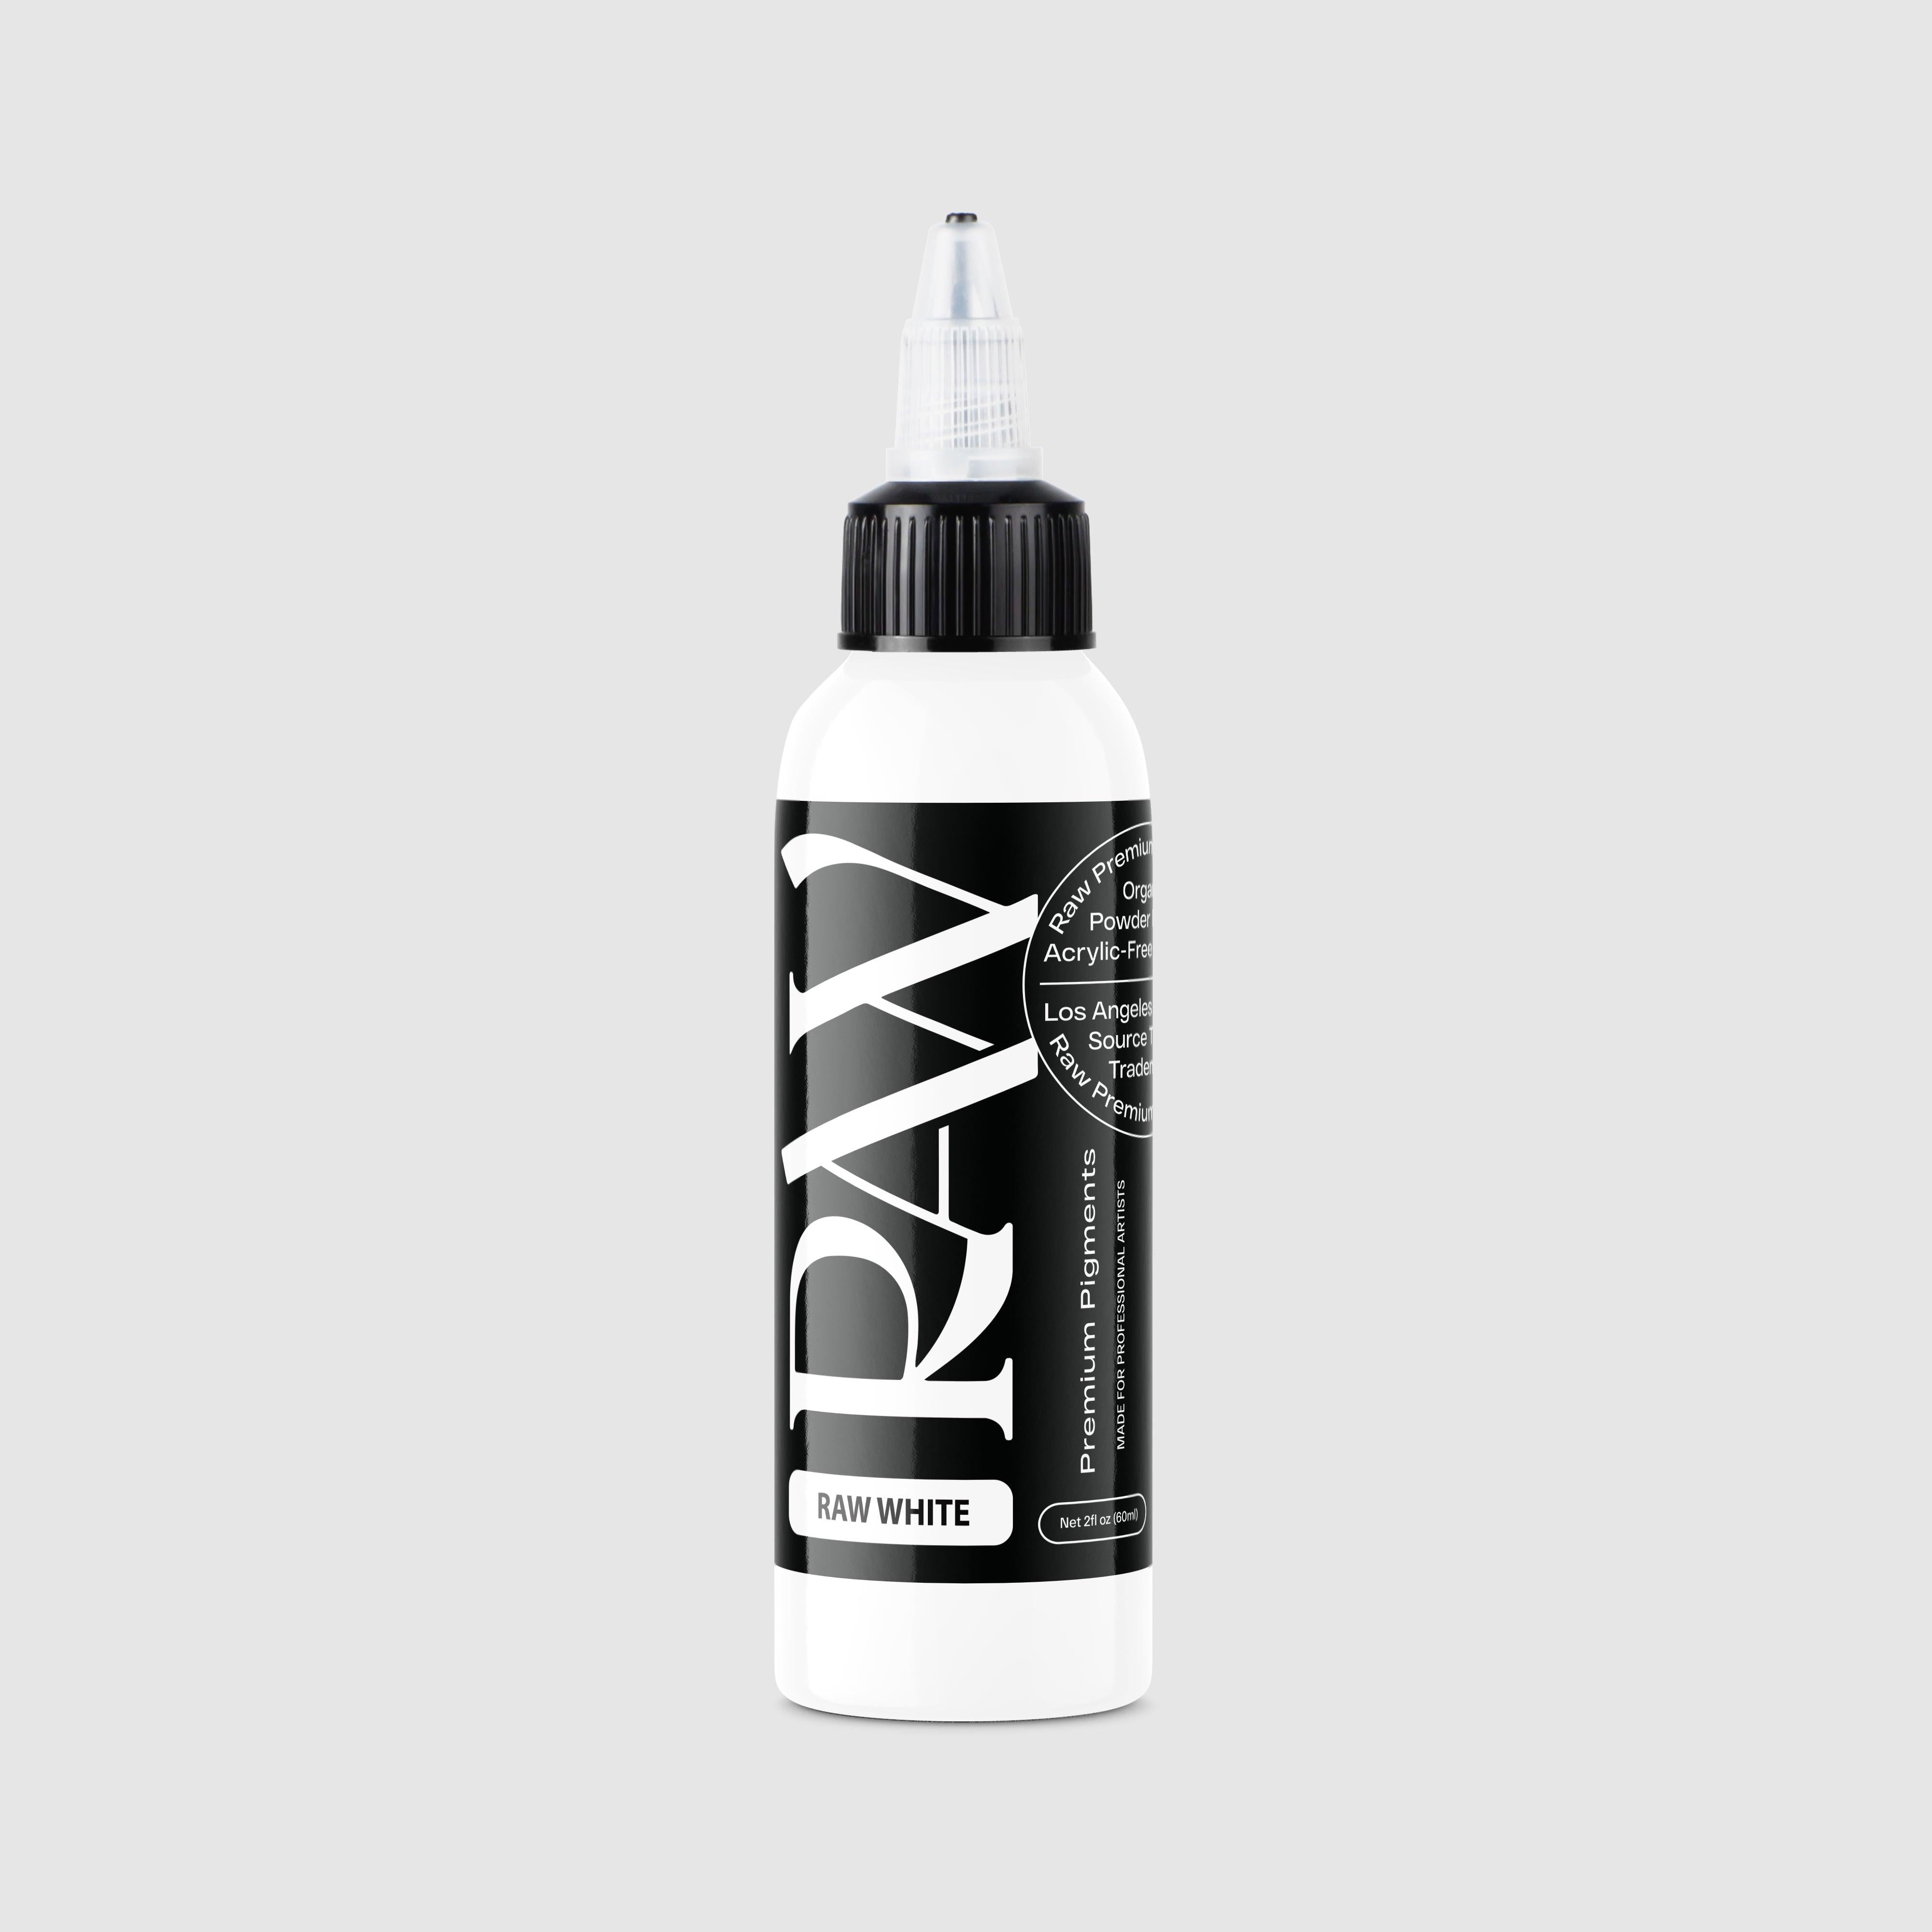 RAW WHITE - Raw Pigments